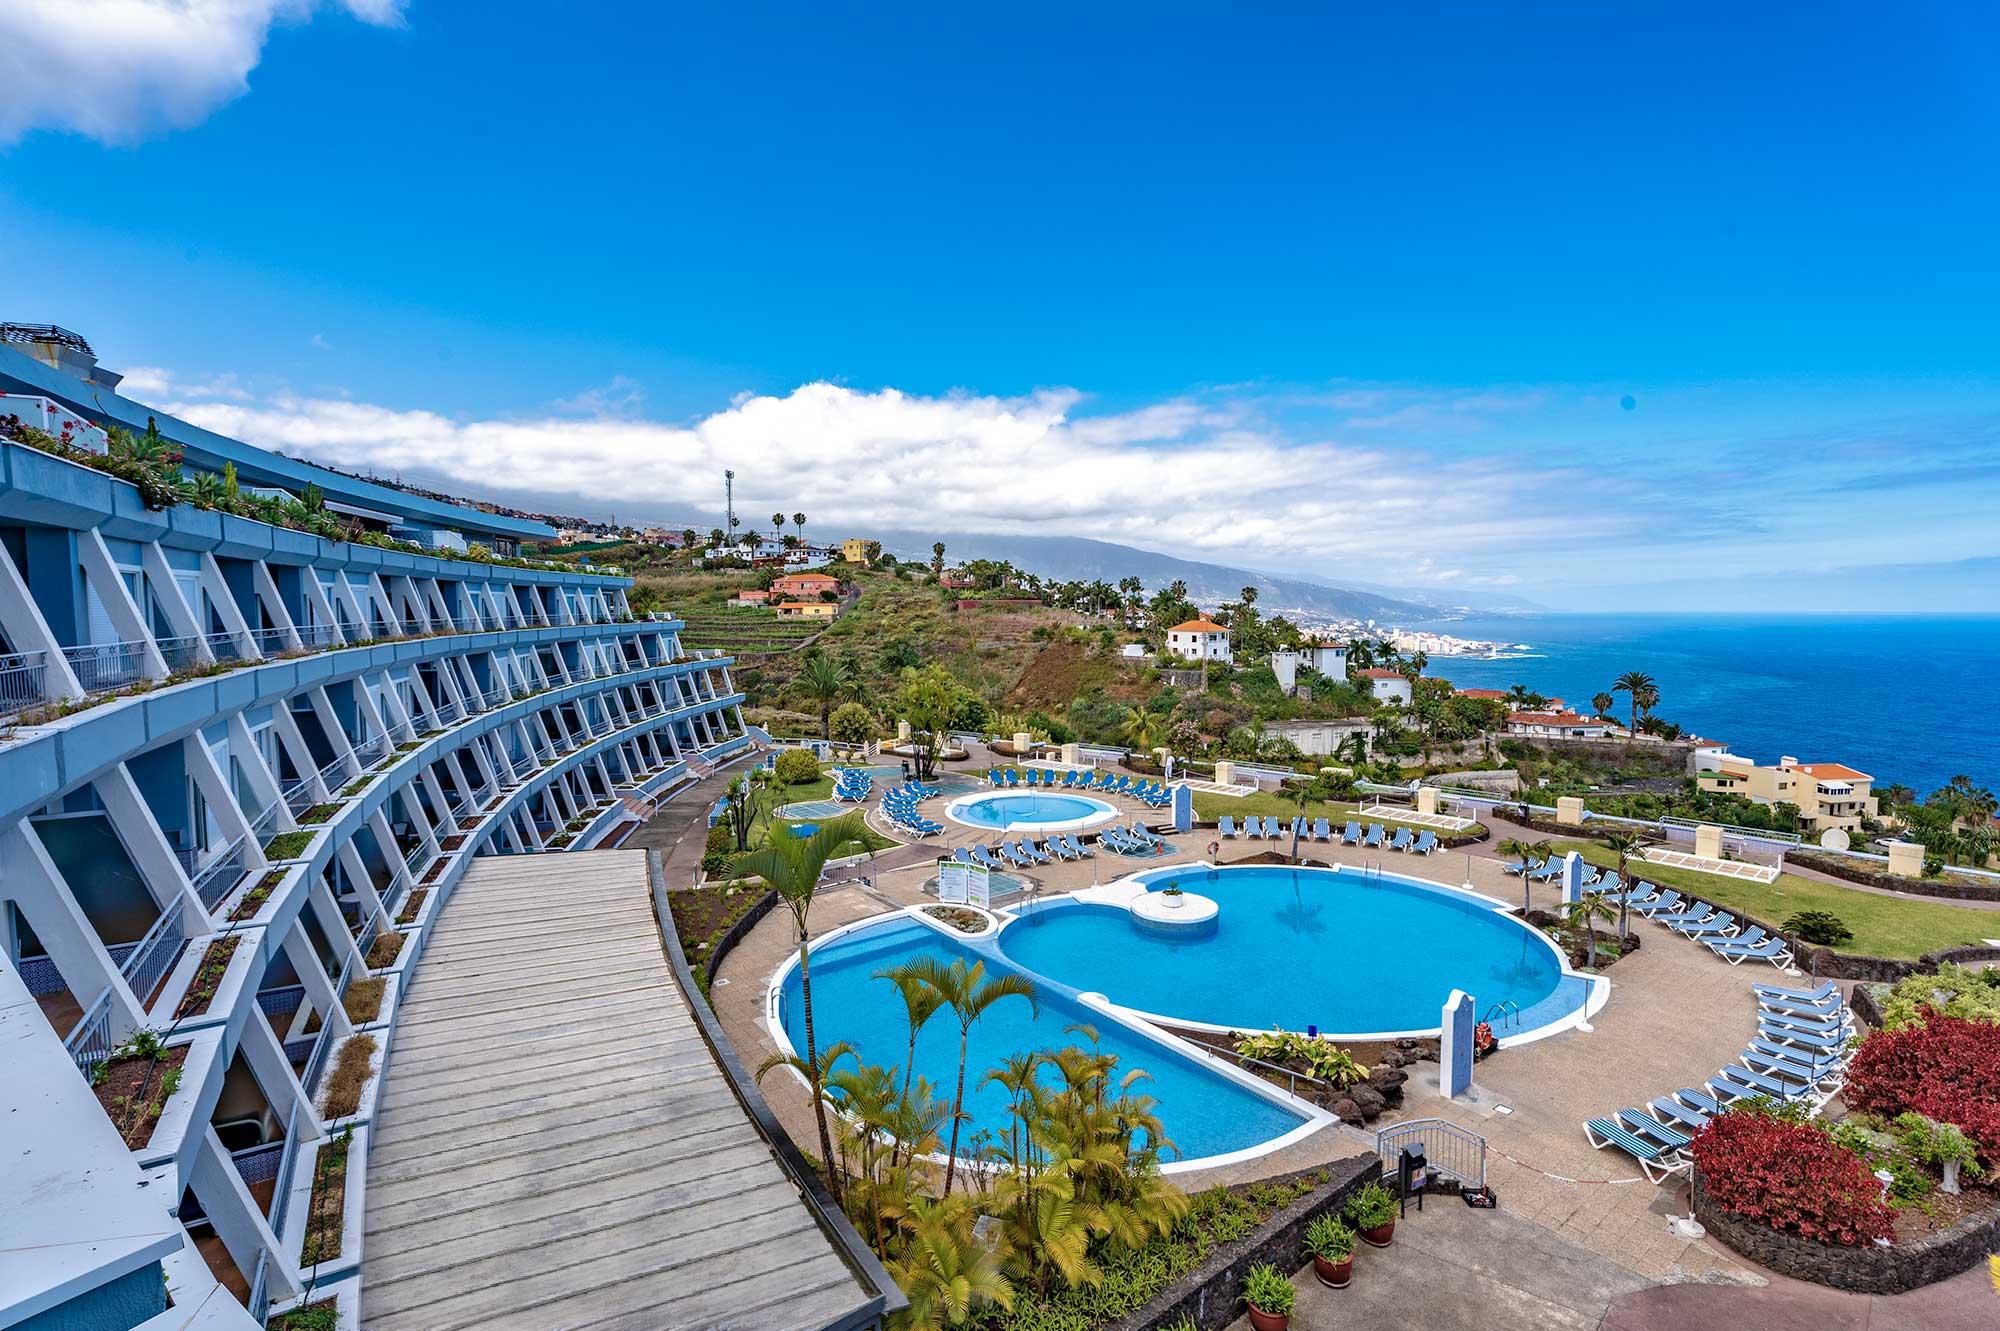 Make your dream come true! Coral Hotels